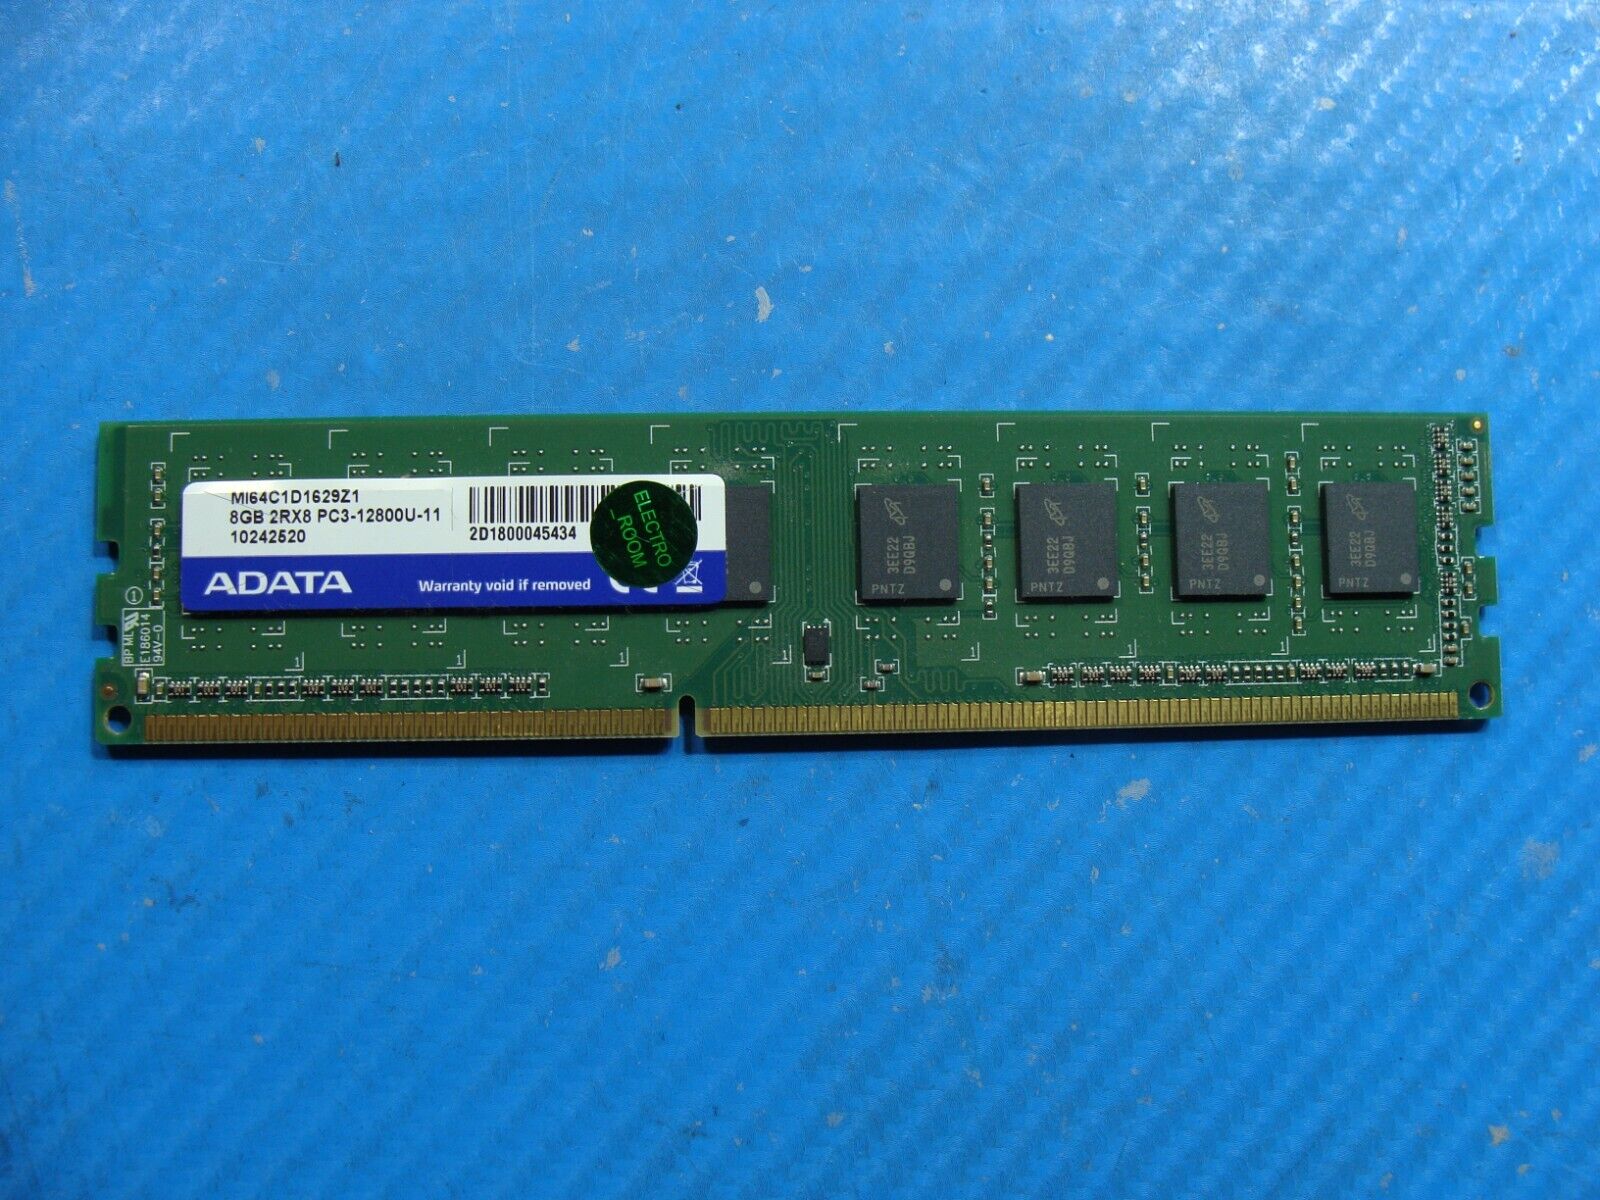 Asus G10AC-US011S ADATA 8GB 2Rx8 PC3-12800U UDIMM Memory RAM MI64C1D1629Z1